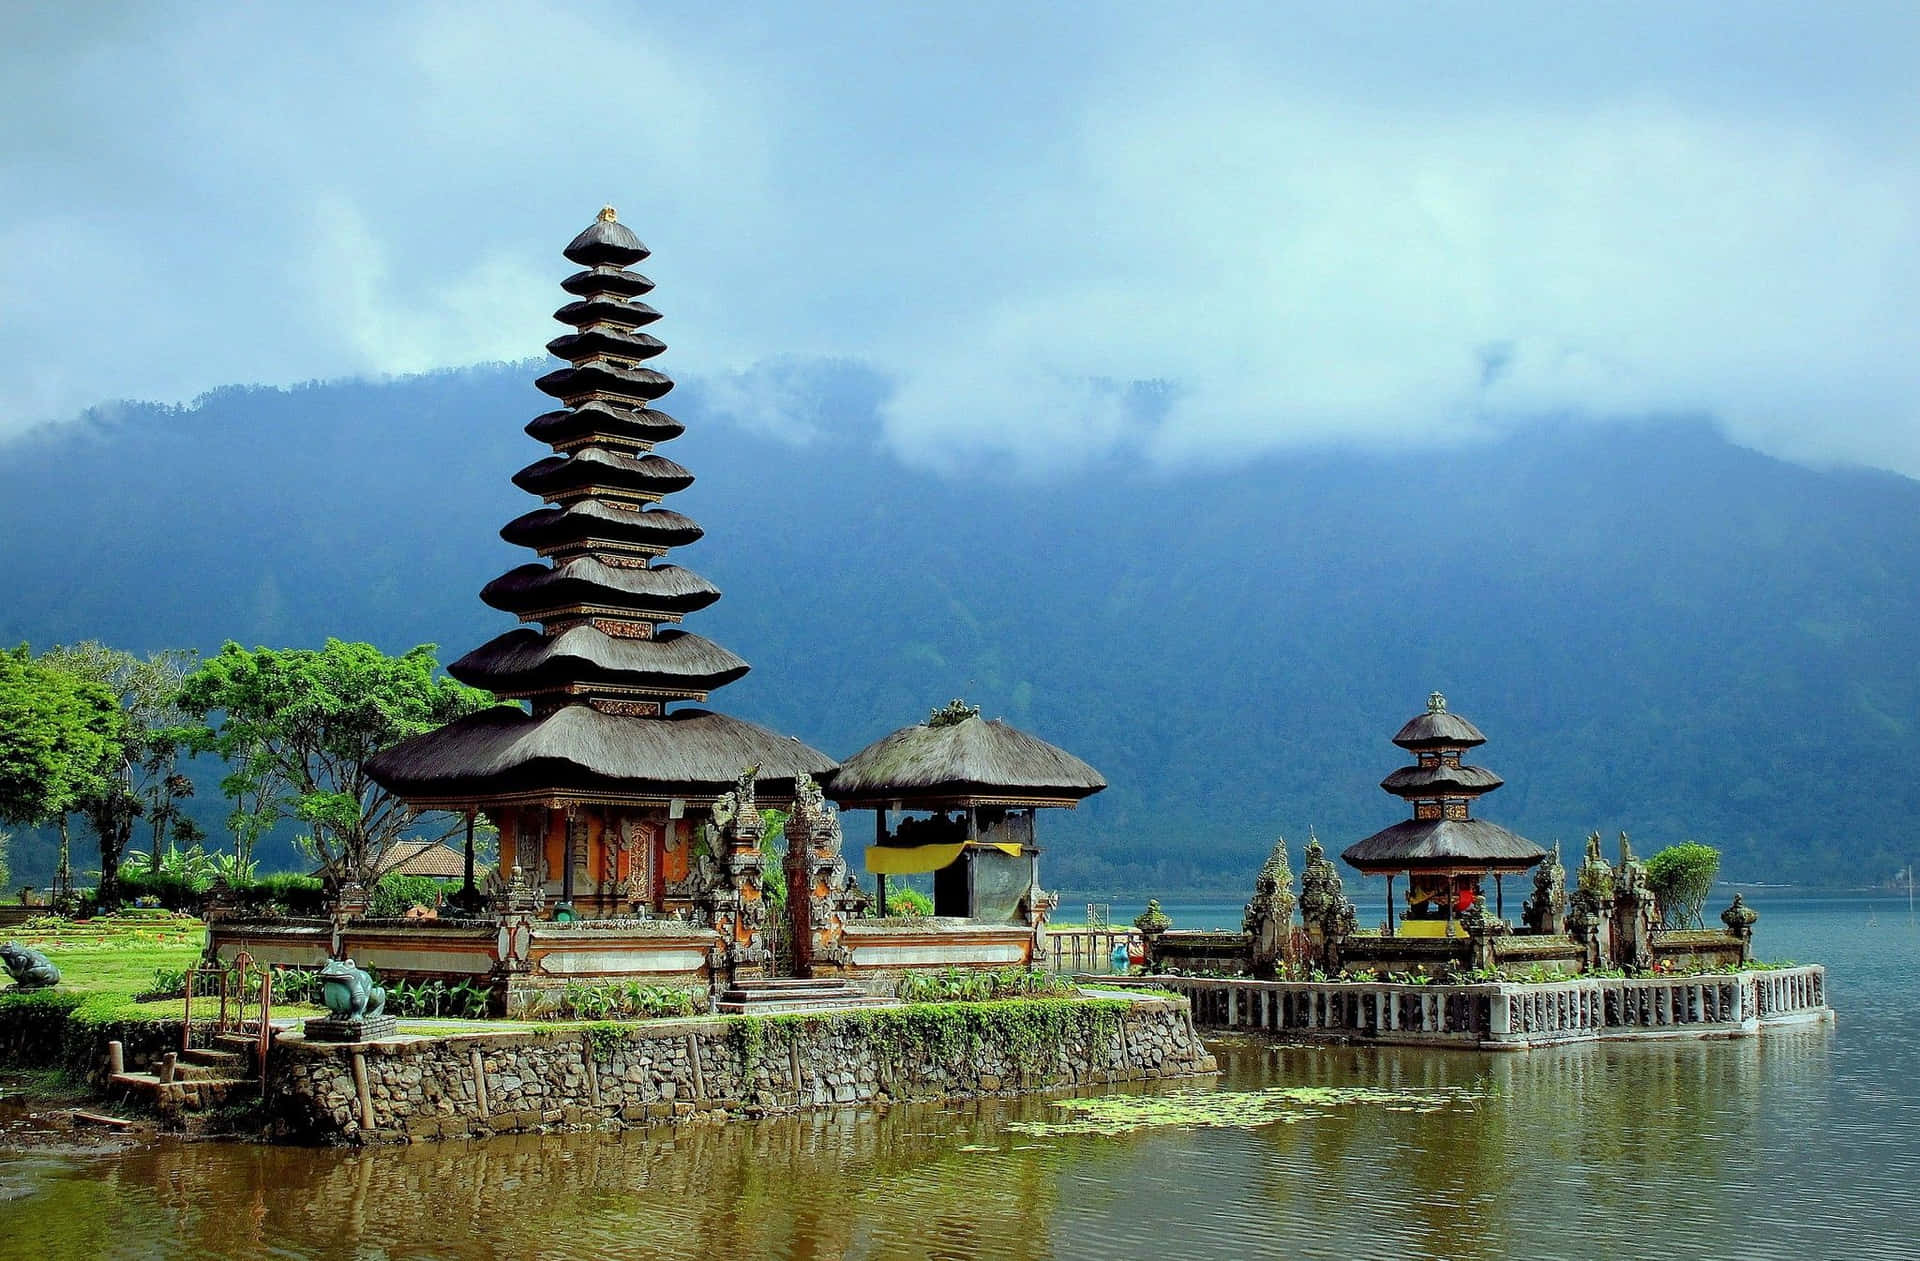 Bali 2048 X 1345 Background